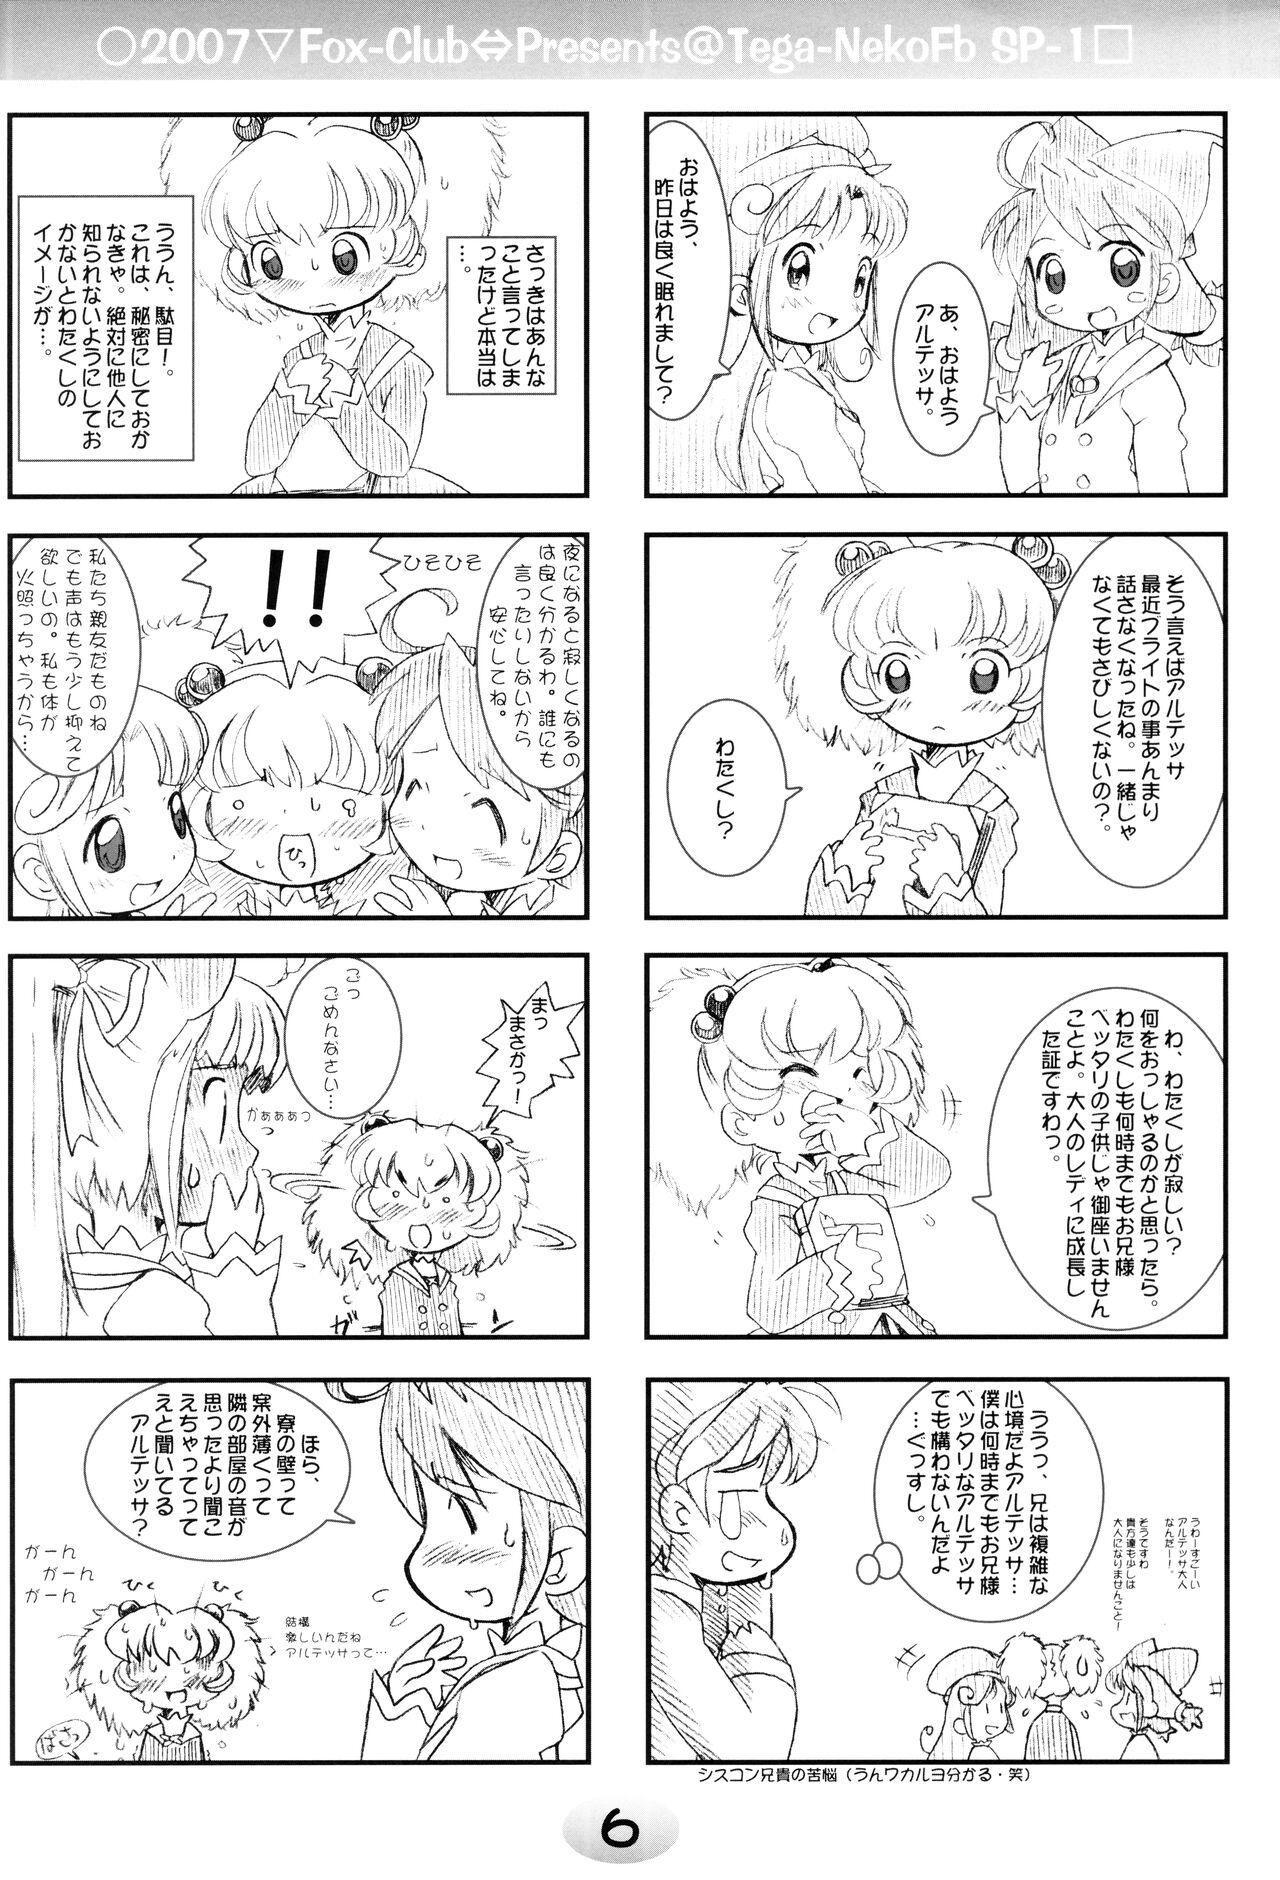 Blowing TeGa-NeKo Fb/SP Futago Hime Plus - Fushigiboshi no futagohime | twin princesses of the wonder planet Chat - Page 4